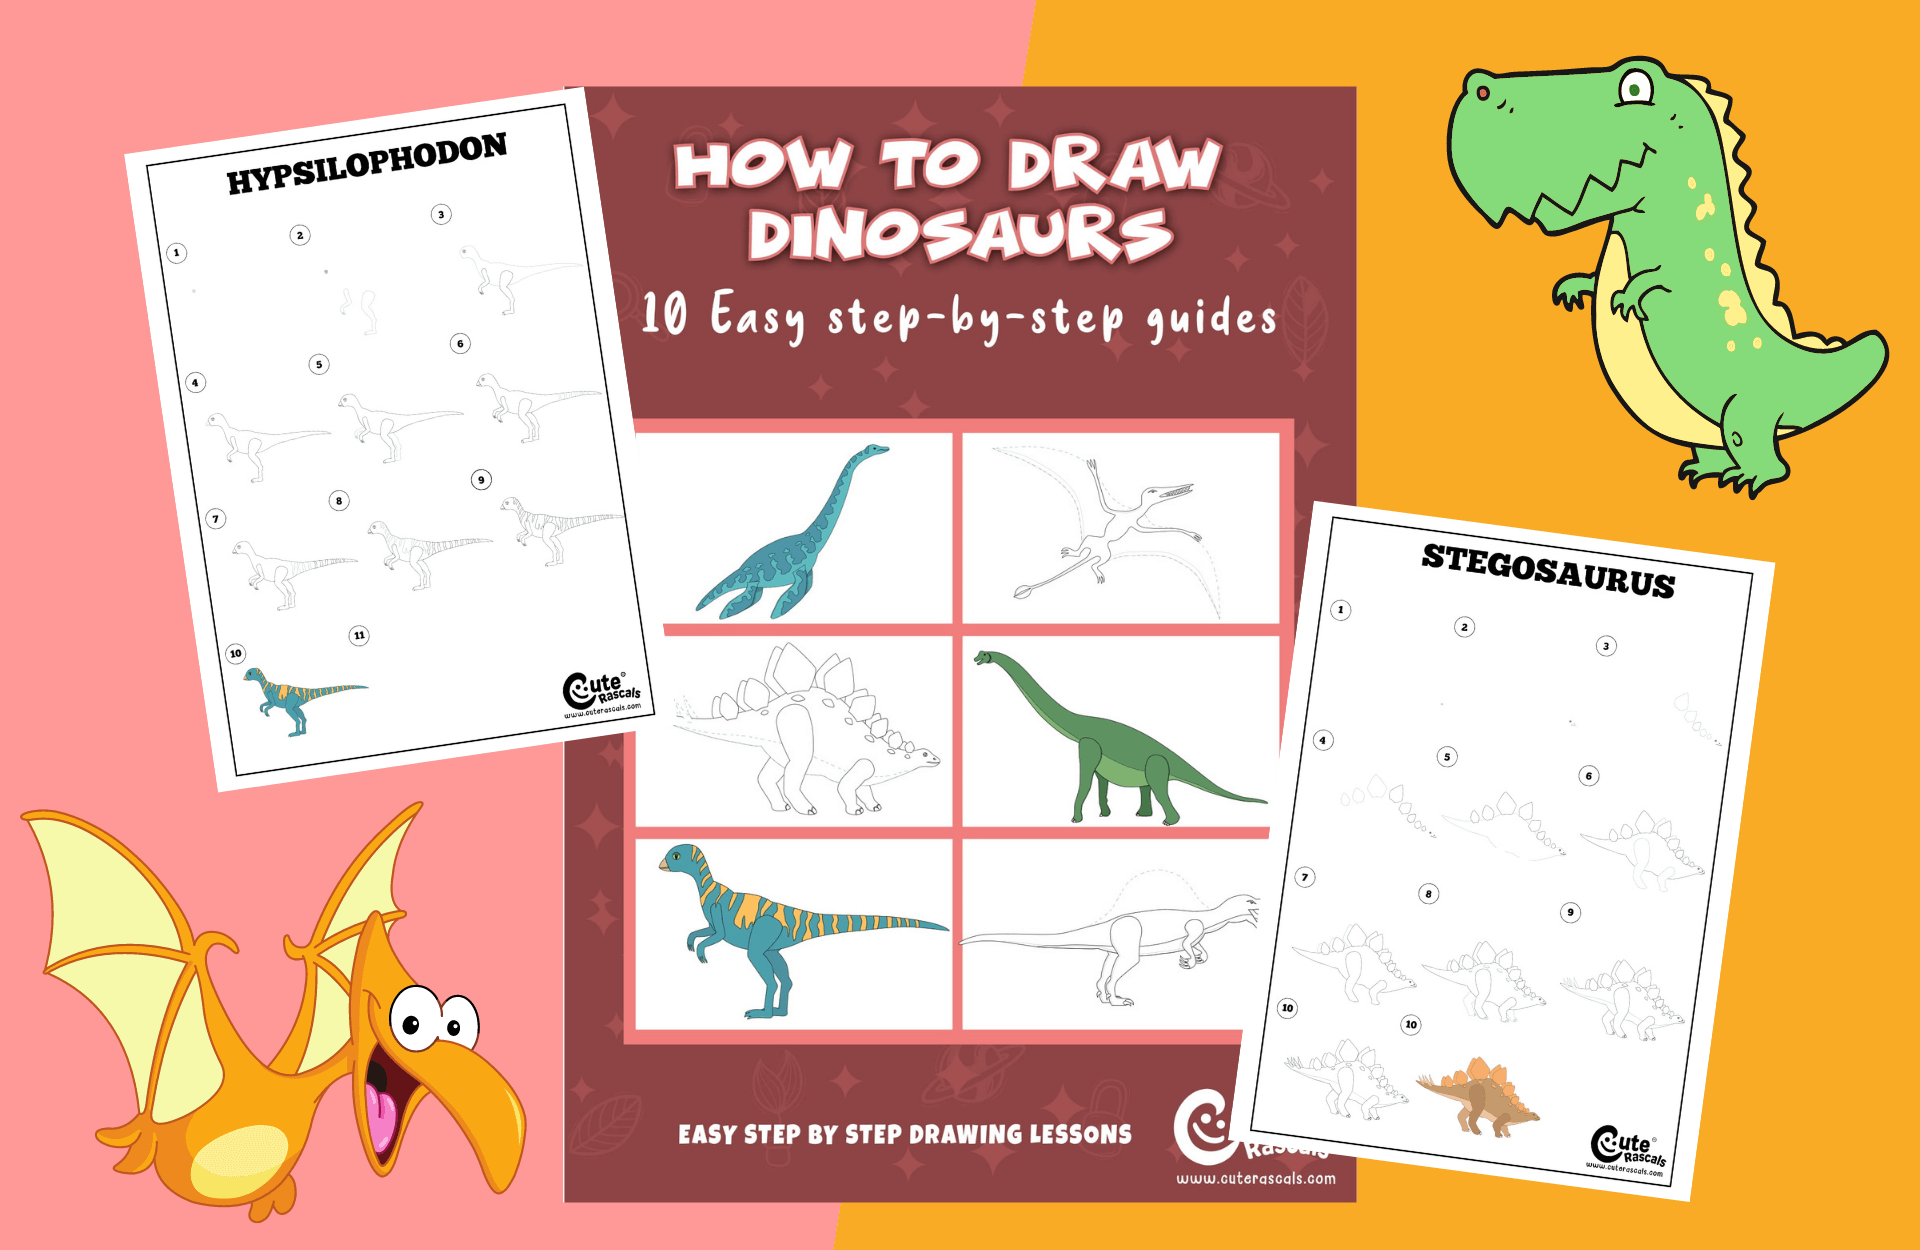 10 Fun Dinosaur Drawing Guide Of Kids